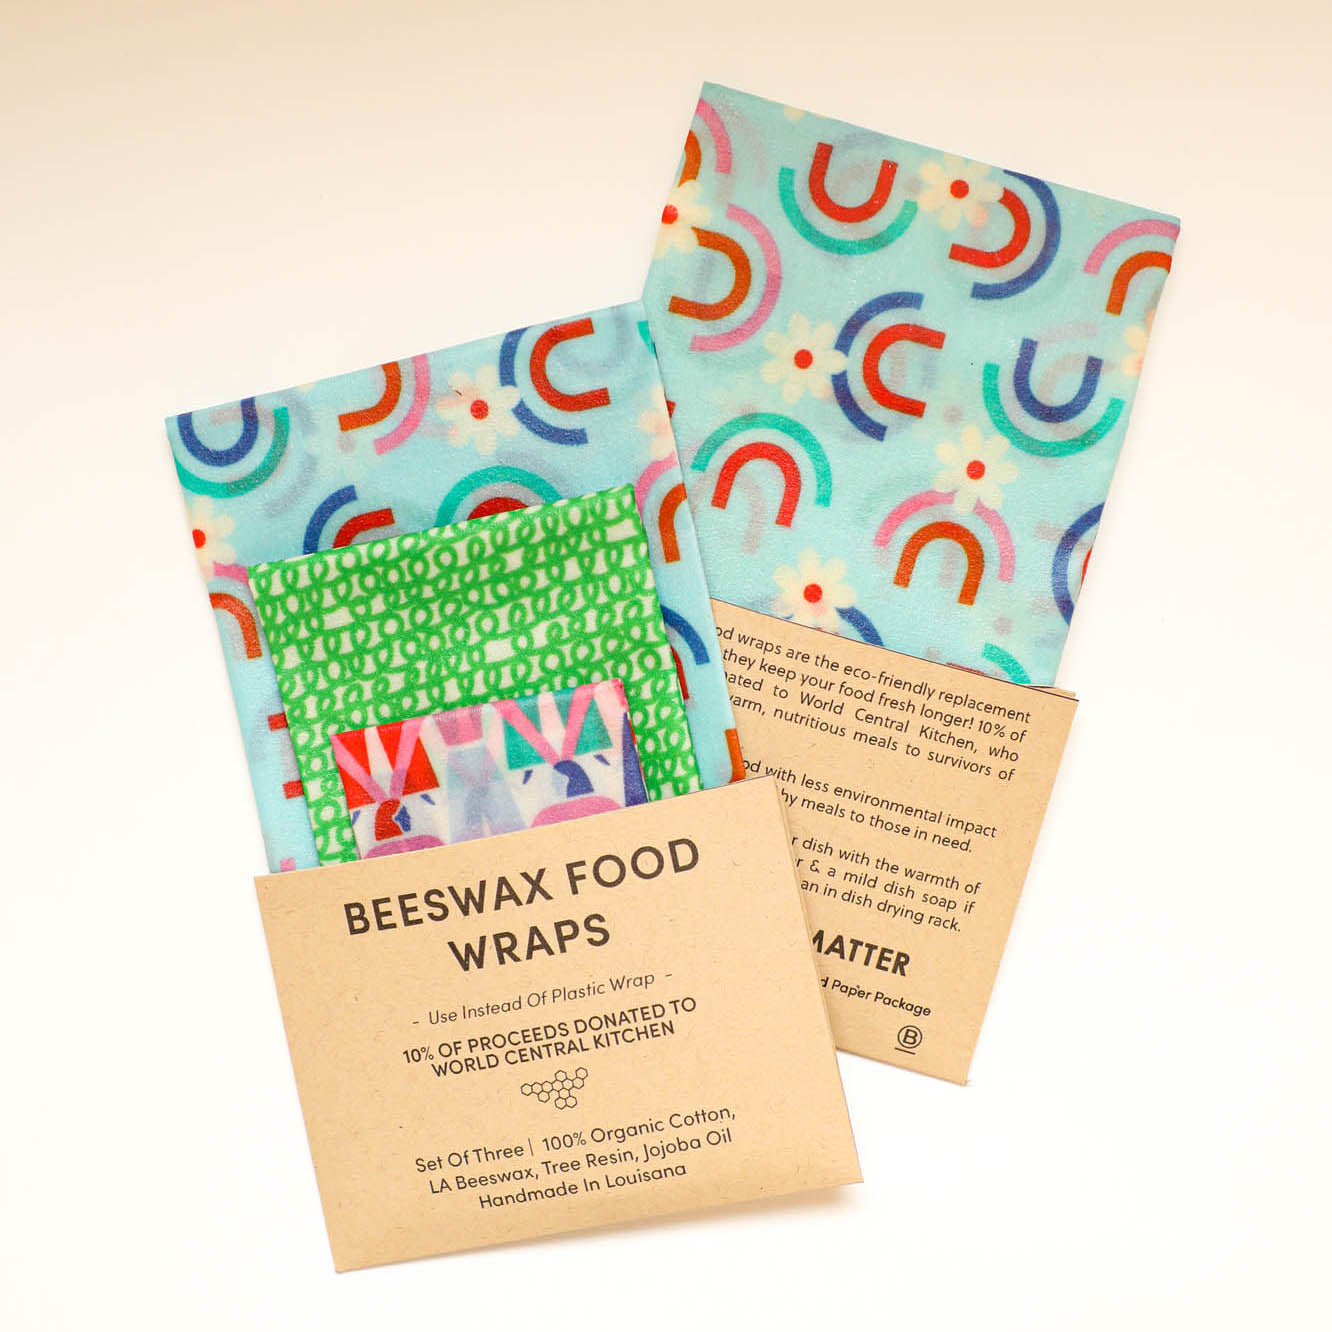 Cling wrap: Polyethylene based eco-friendly wrap to keep your food fresh